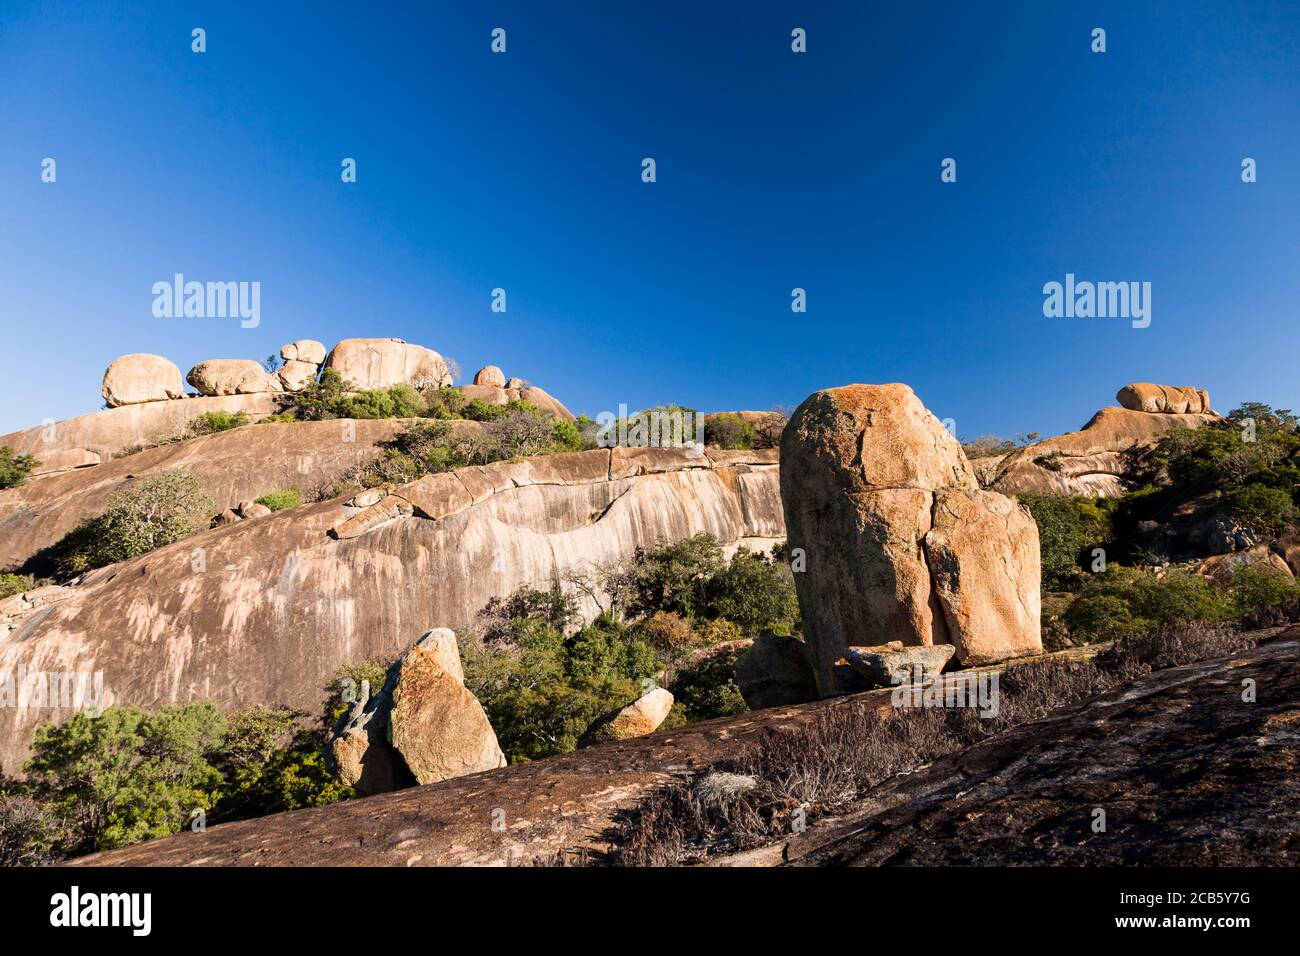 Matobo hills, natural granite rockbed at trekking to Bambata cave, Matobo National Park, suburbs of Bulawayo, Matabeleland South, Zimbabwe, Africa Stock Photo